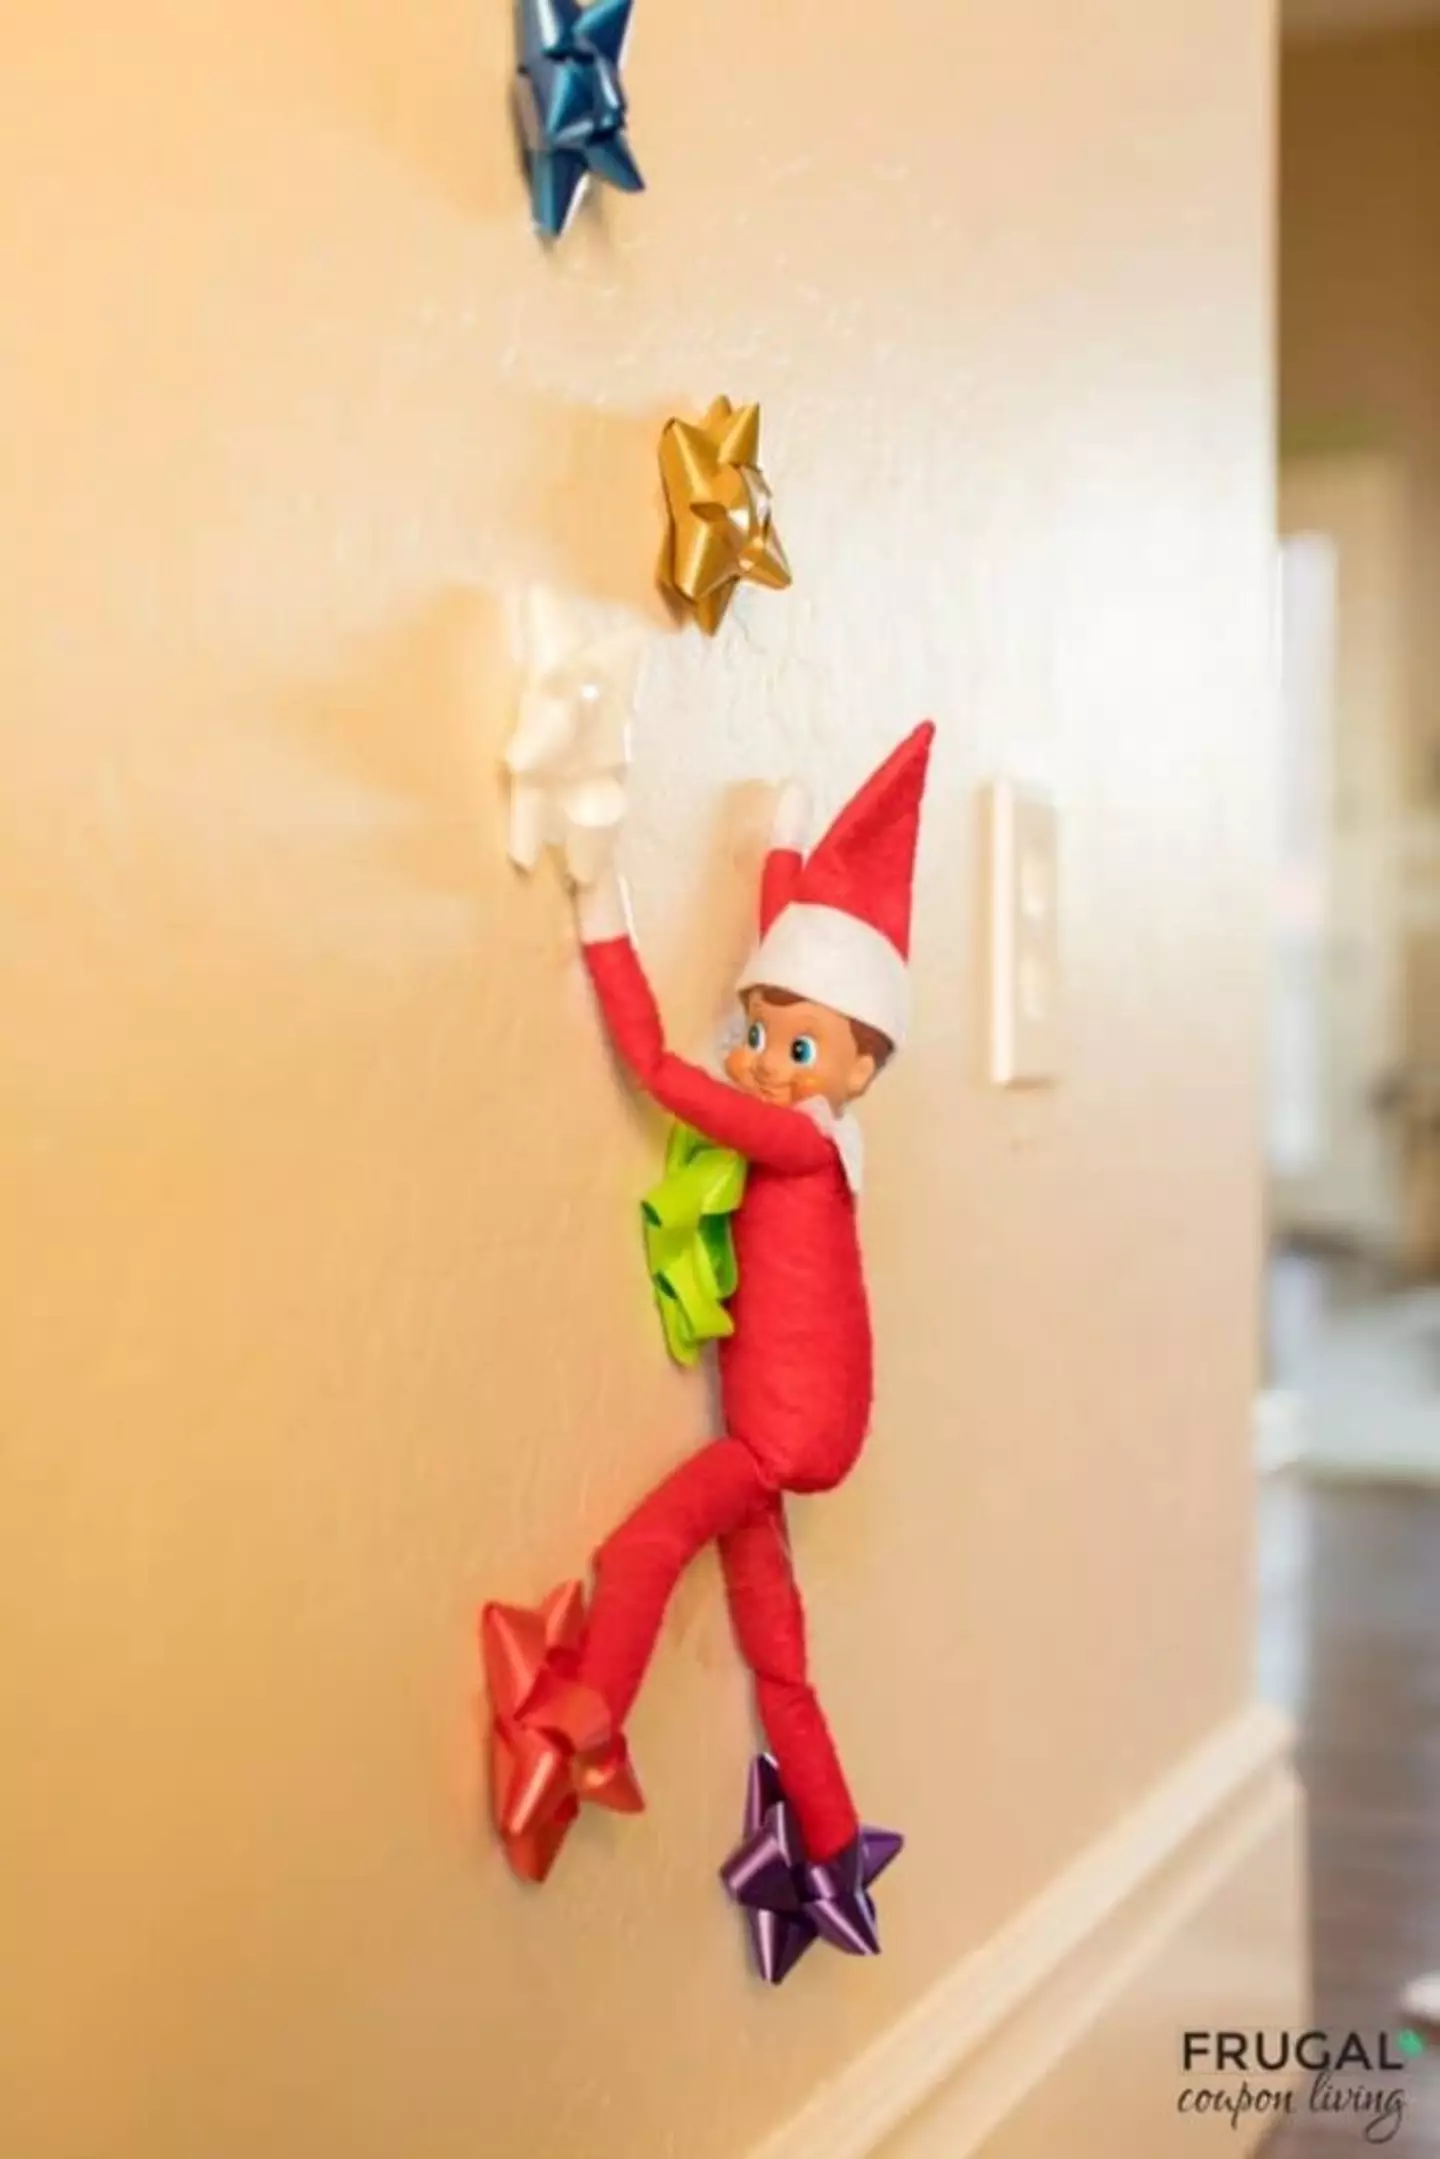 Elf climbing the wall. (